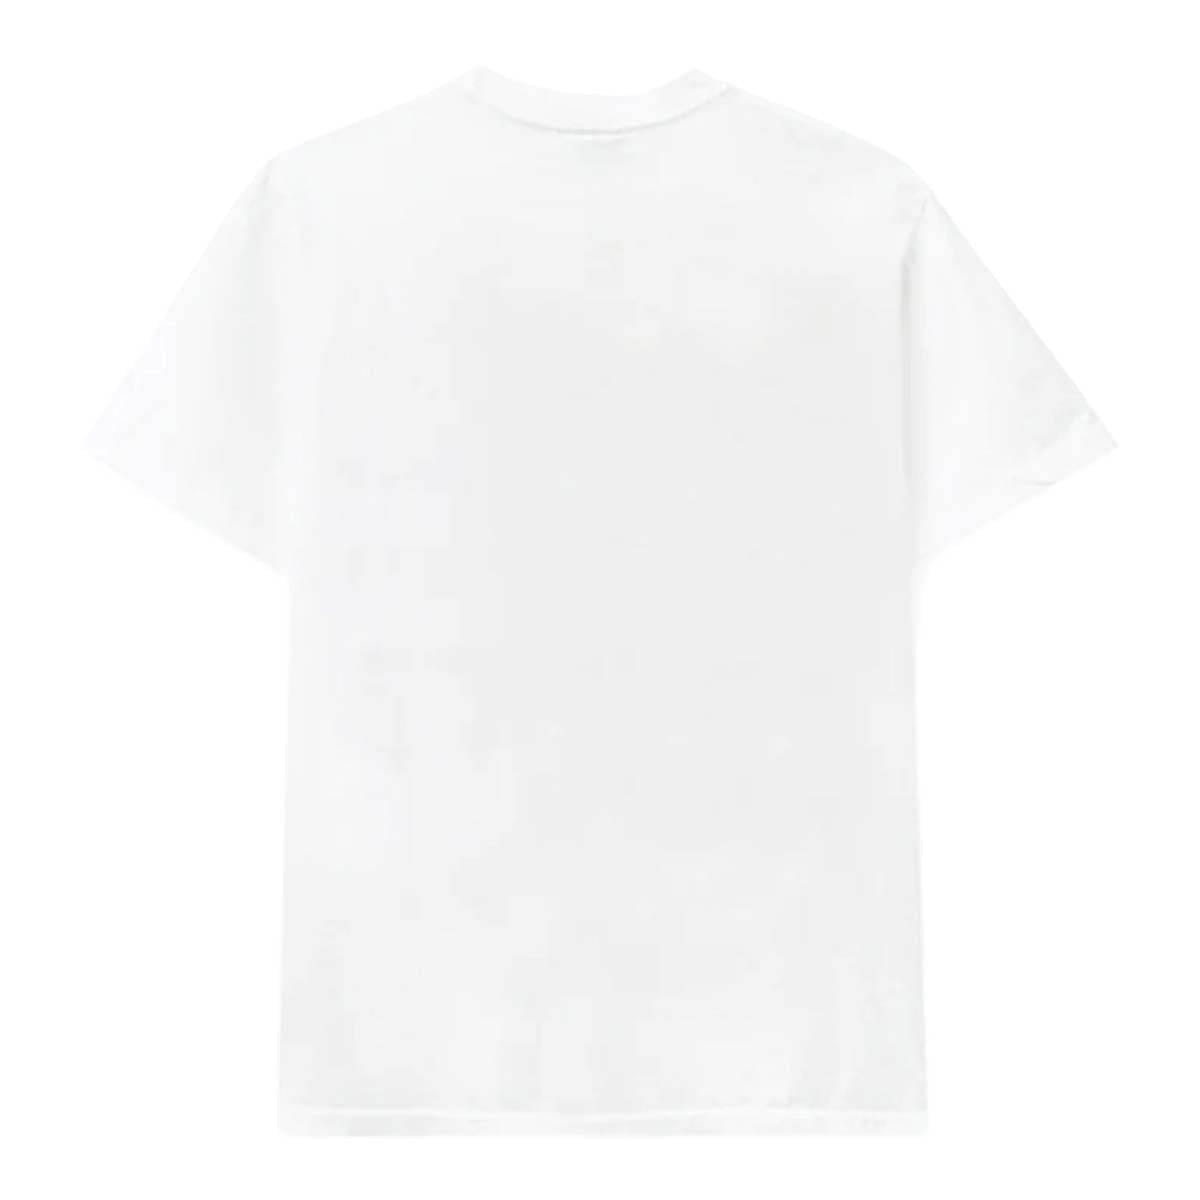 Real Bad Man T-Shirts RBM FRONT HITTER S/S TEE